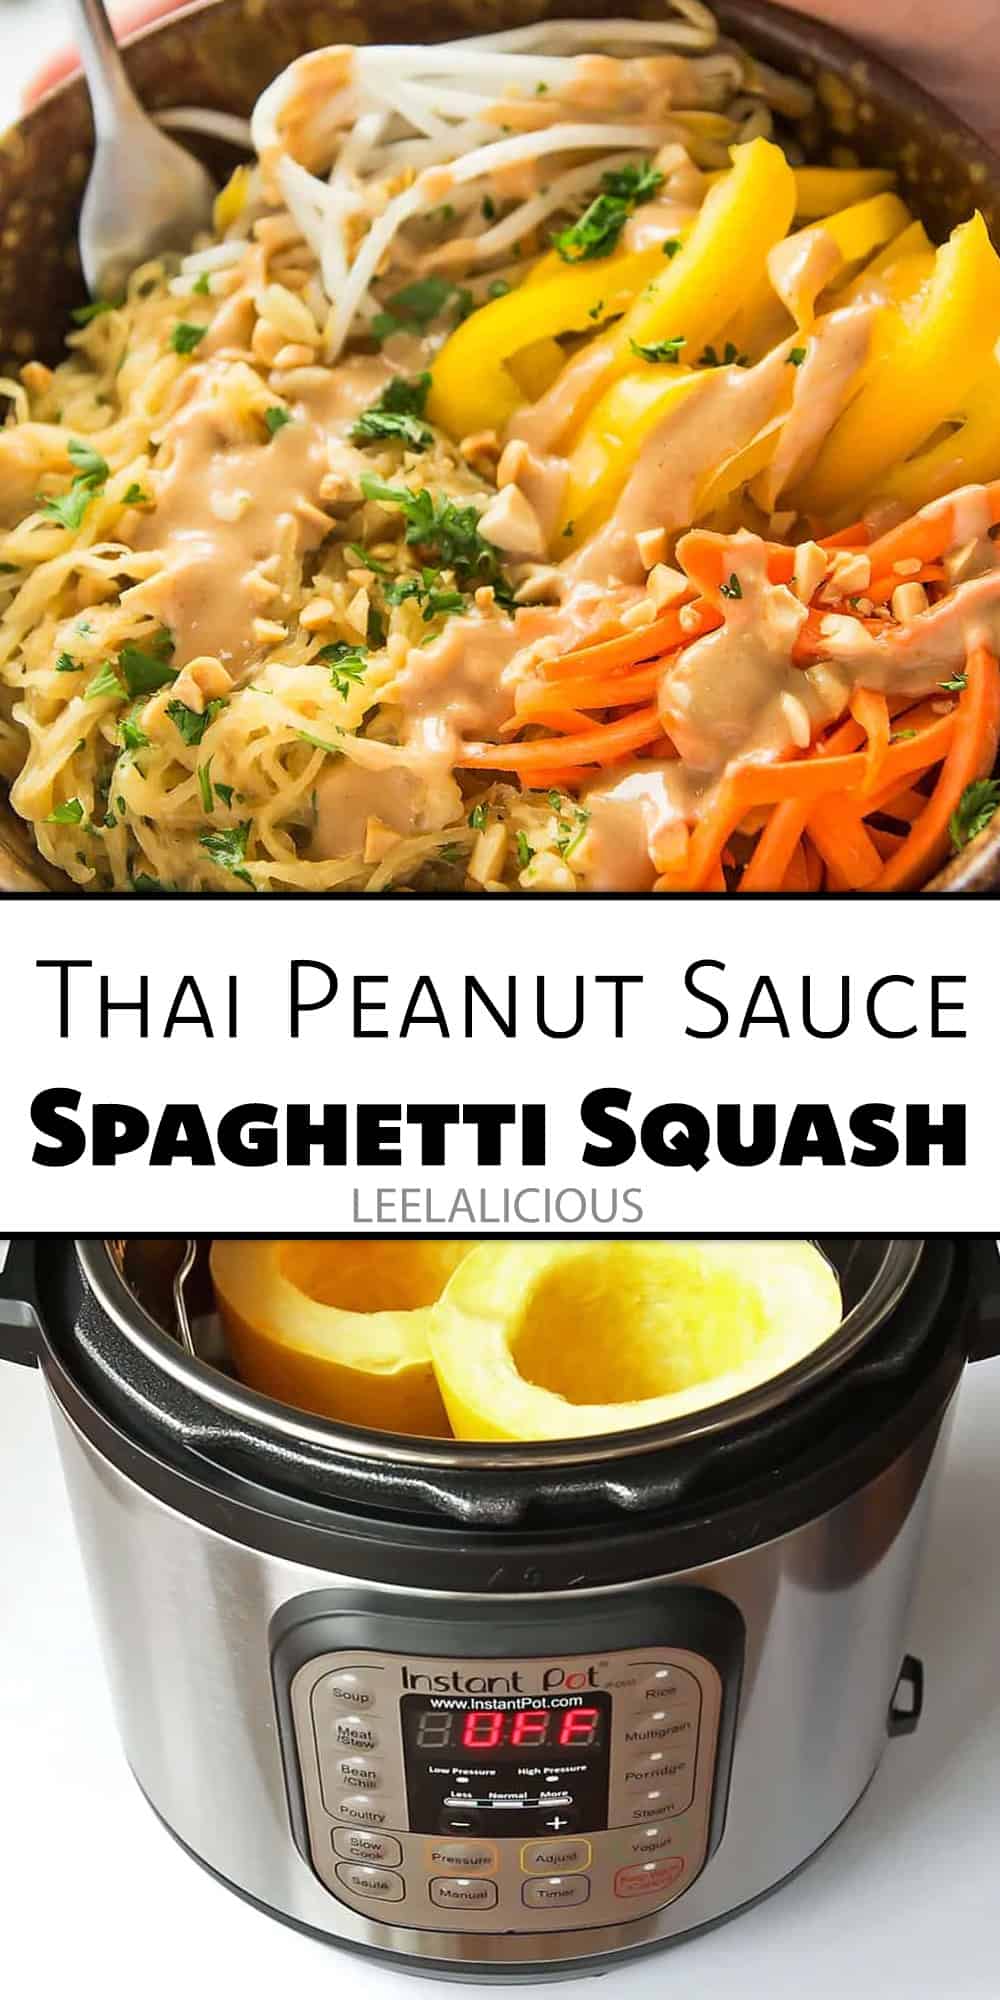 Thai Peanut Sauce Spaghetti Squash